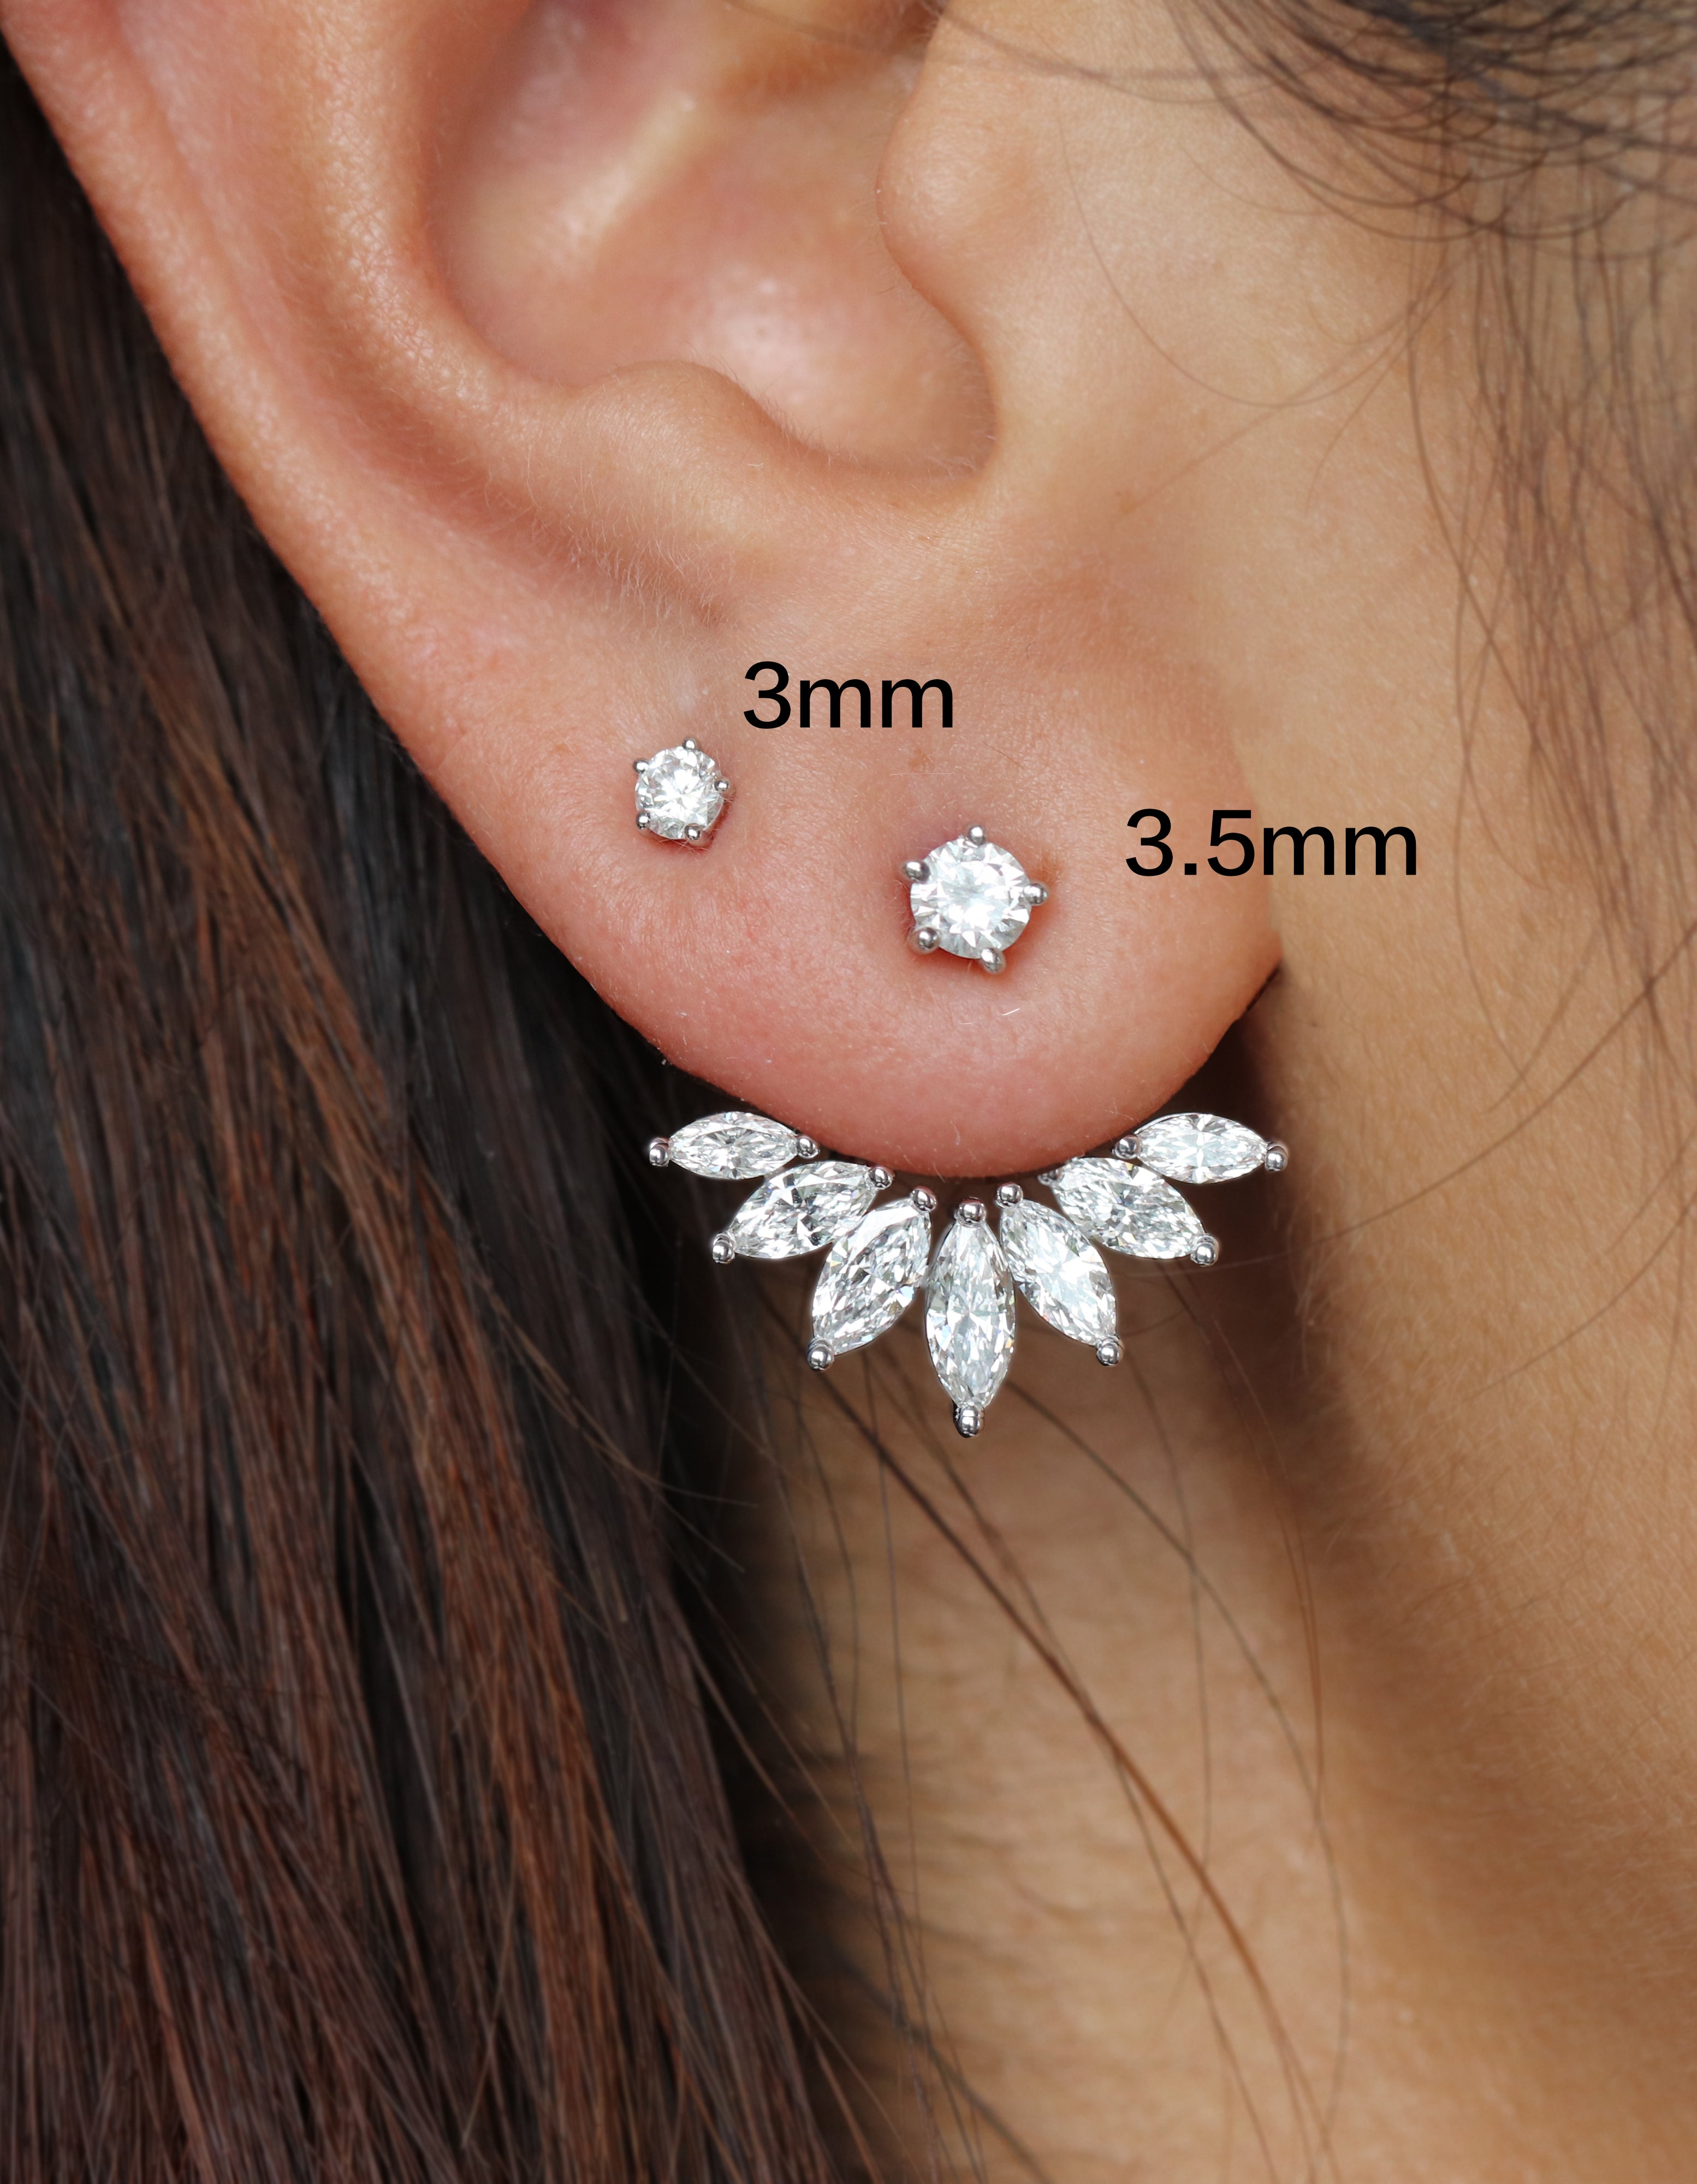 Diamond Stud Earring from 3mm-3.5mm